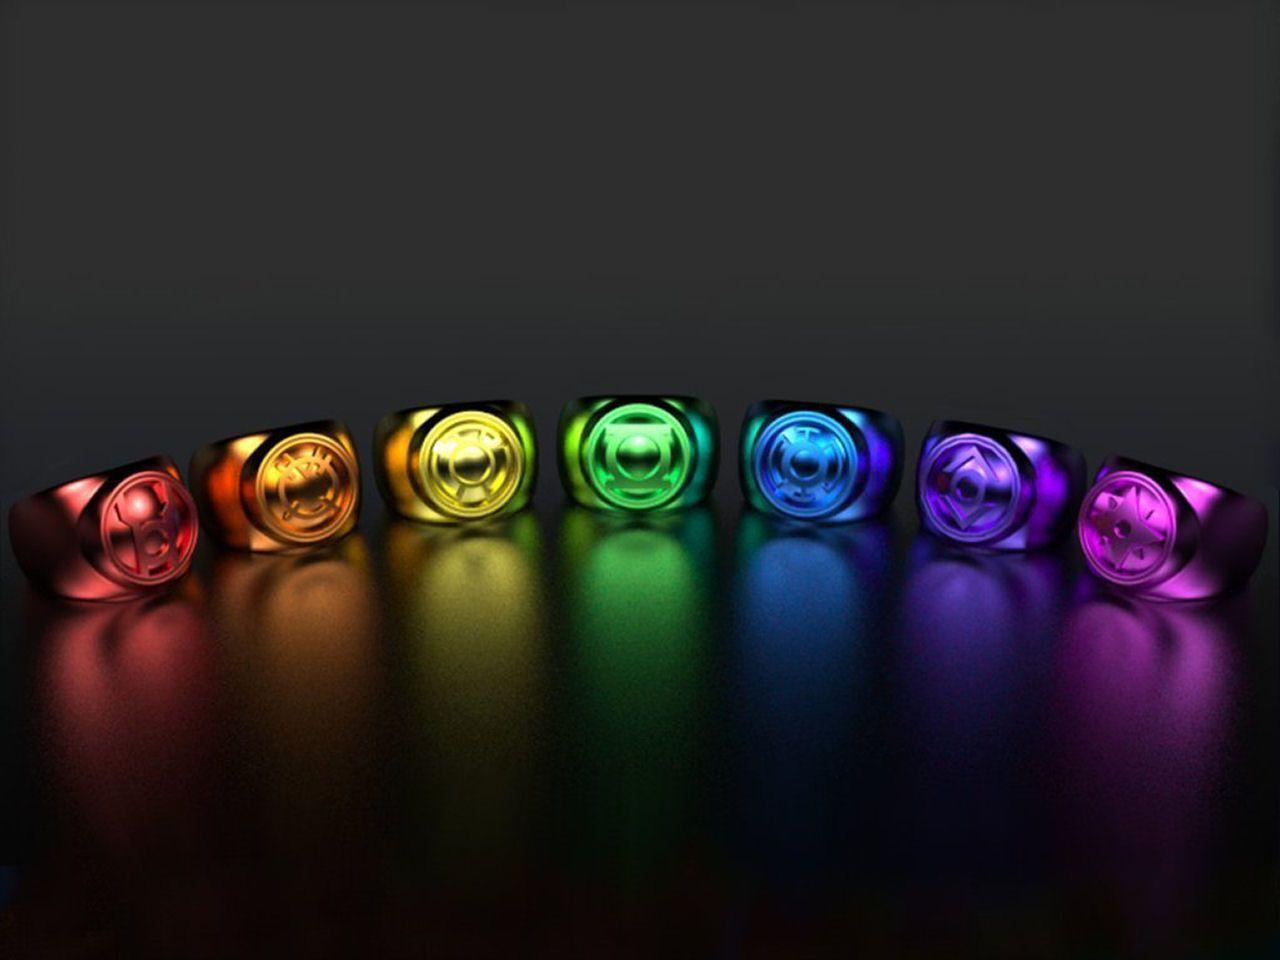 Green Lantern, DC Comics, rings, colors wallpaper. Best Games